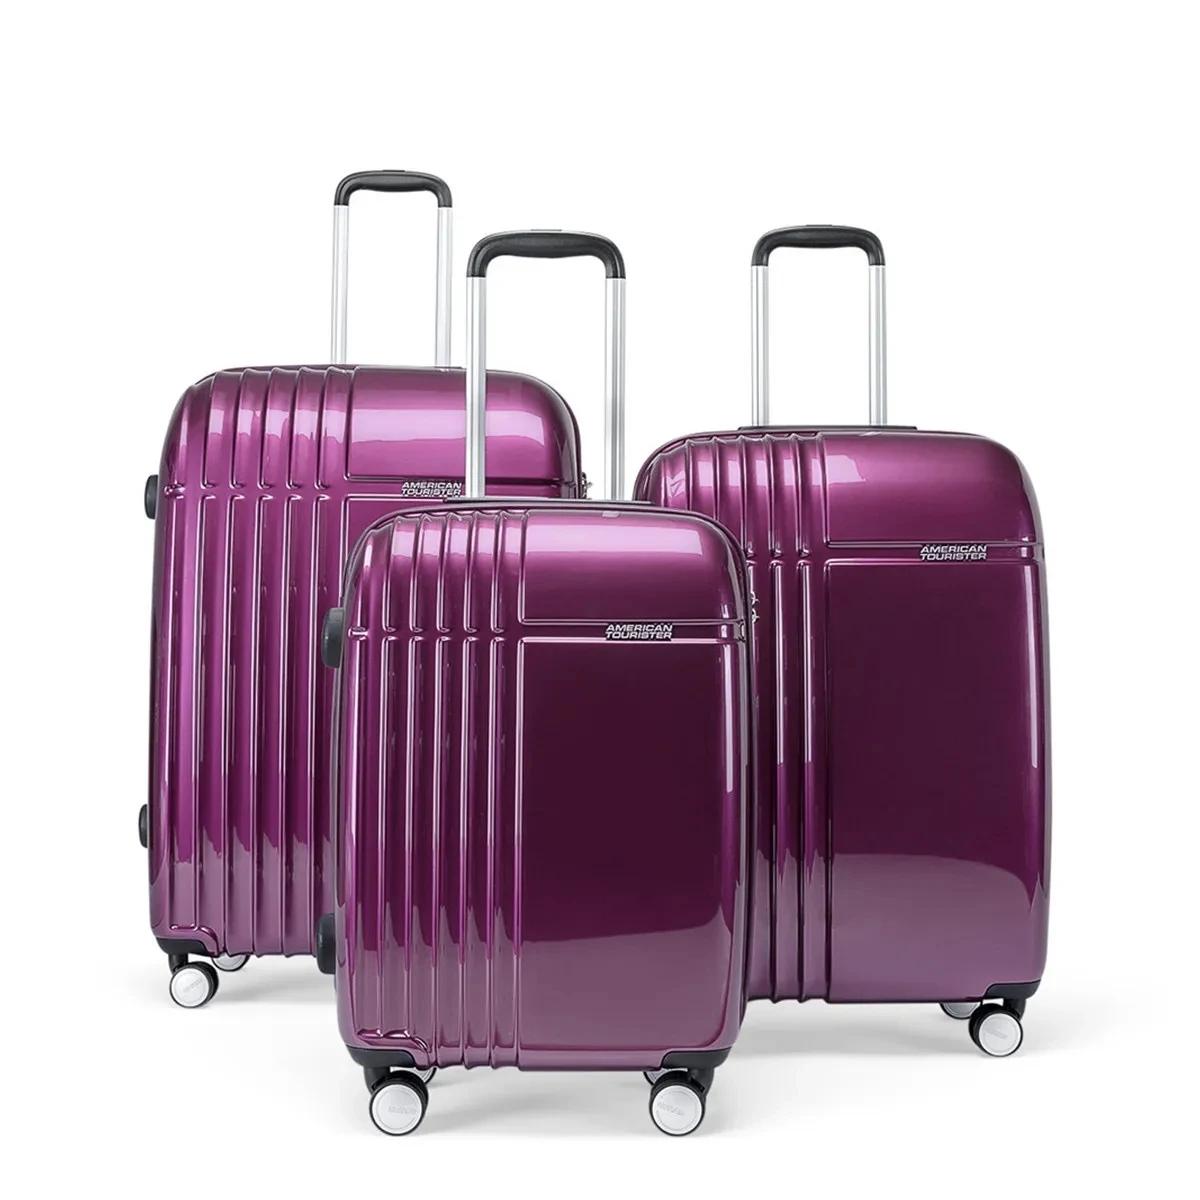 20"24"28" Inch 3 Piece Travel Suitcase Set Export Trolley Case Designer Rolling Luggage Set On Wheels